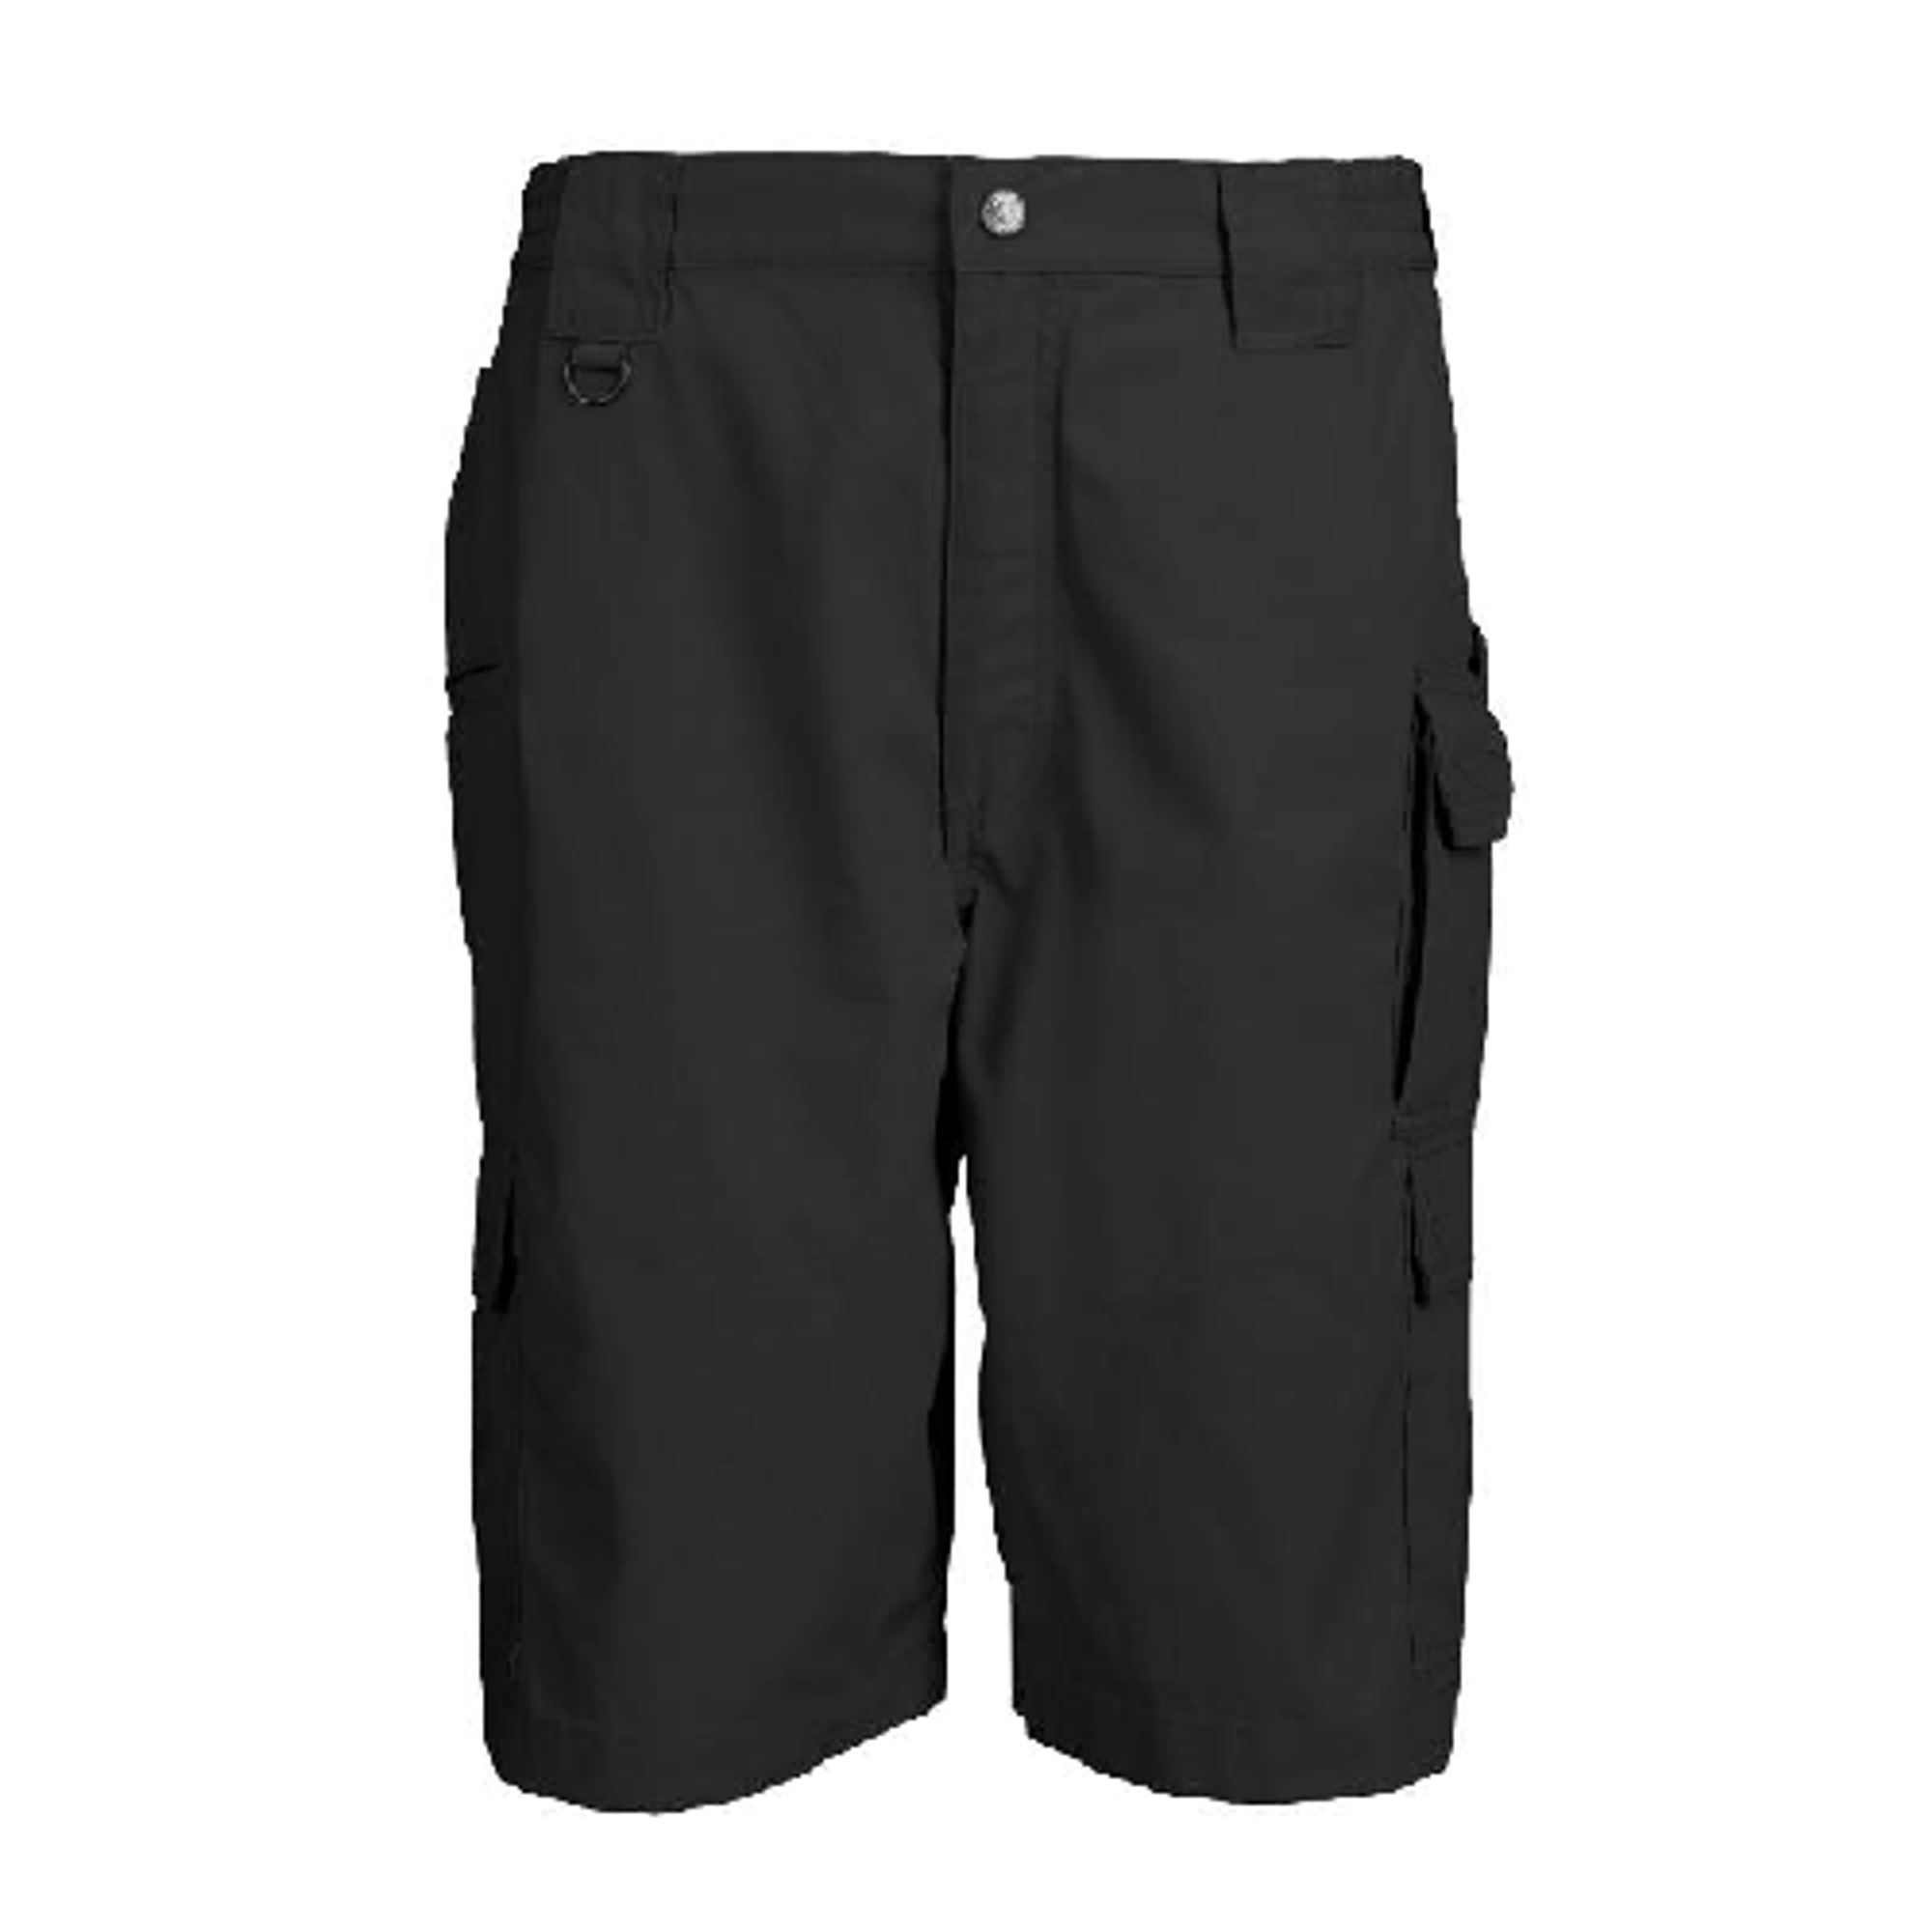 Taclite Pro 11 Shorts - KR5-7330801934